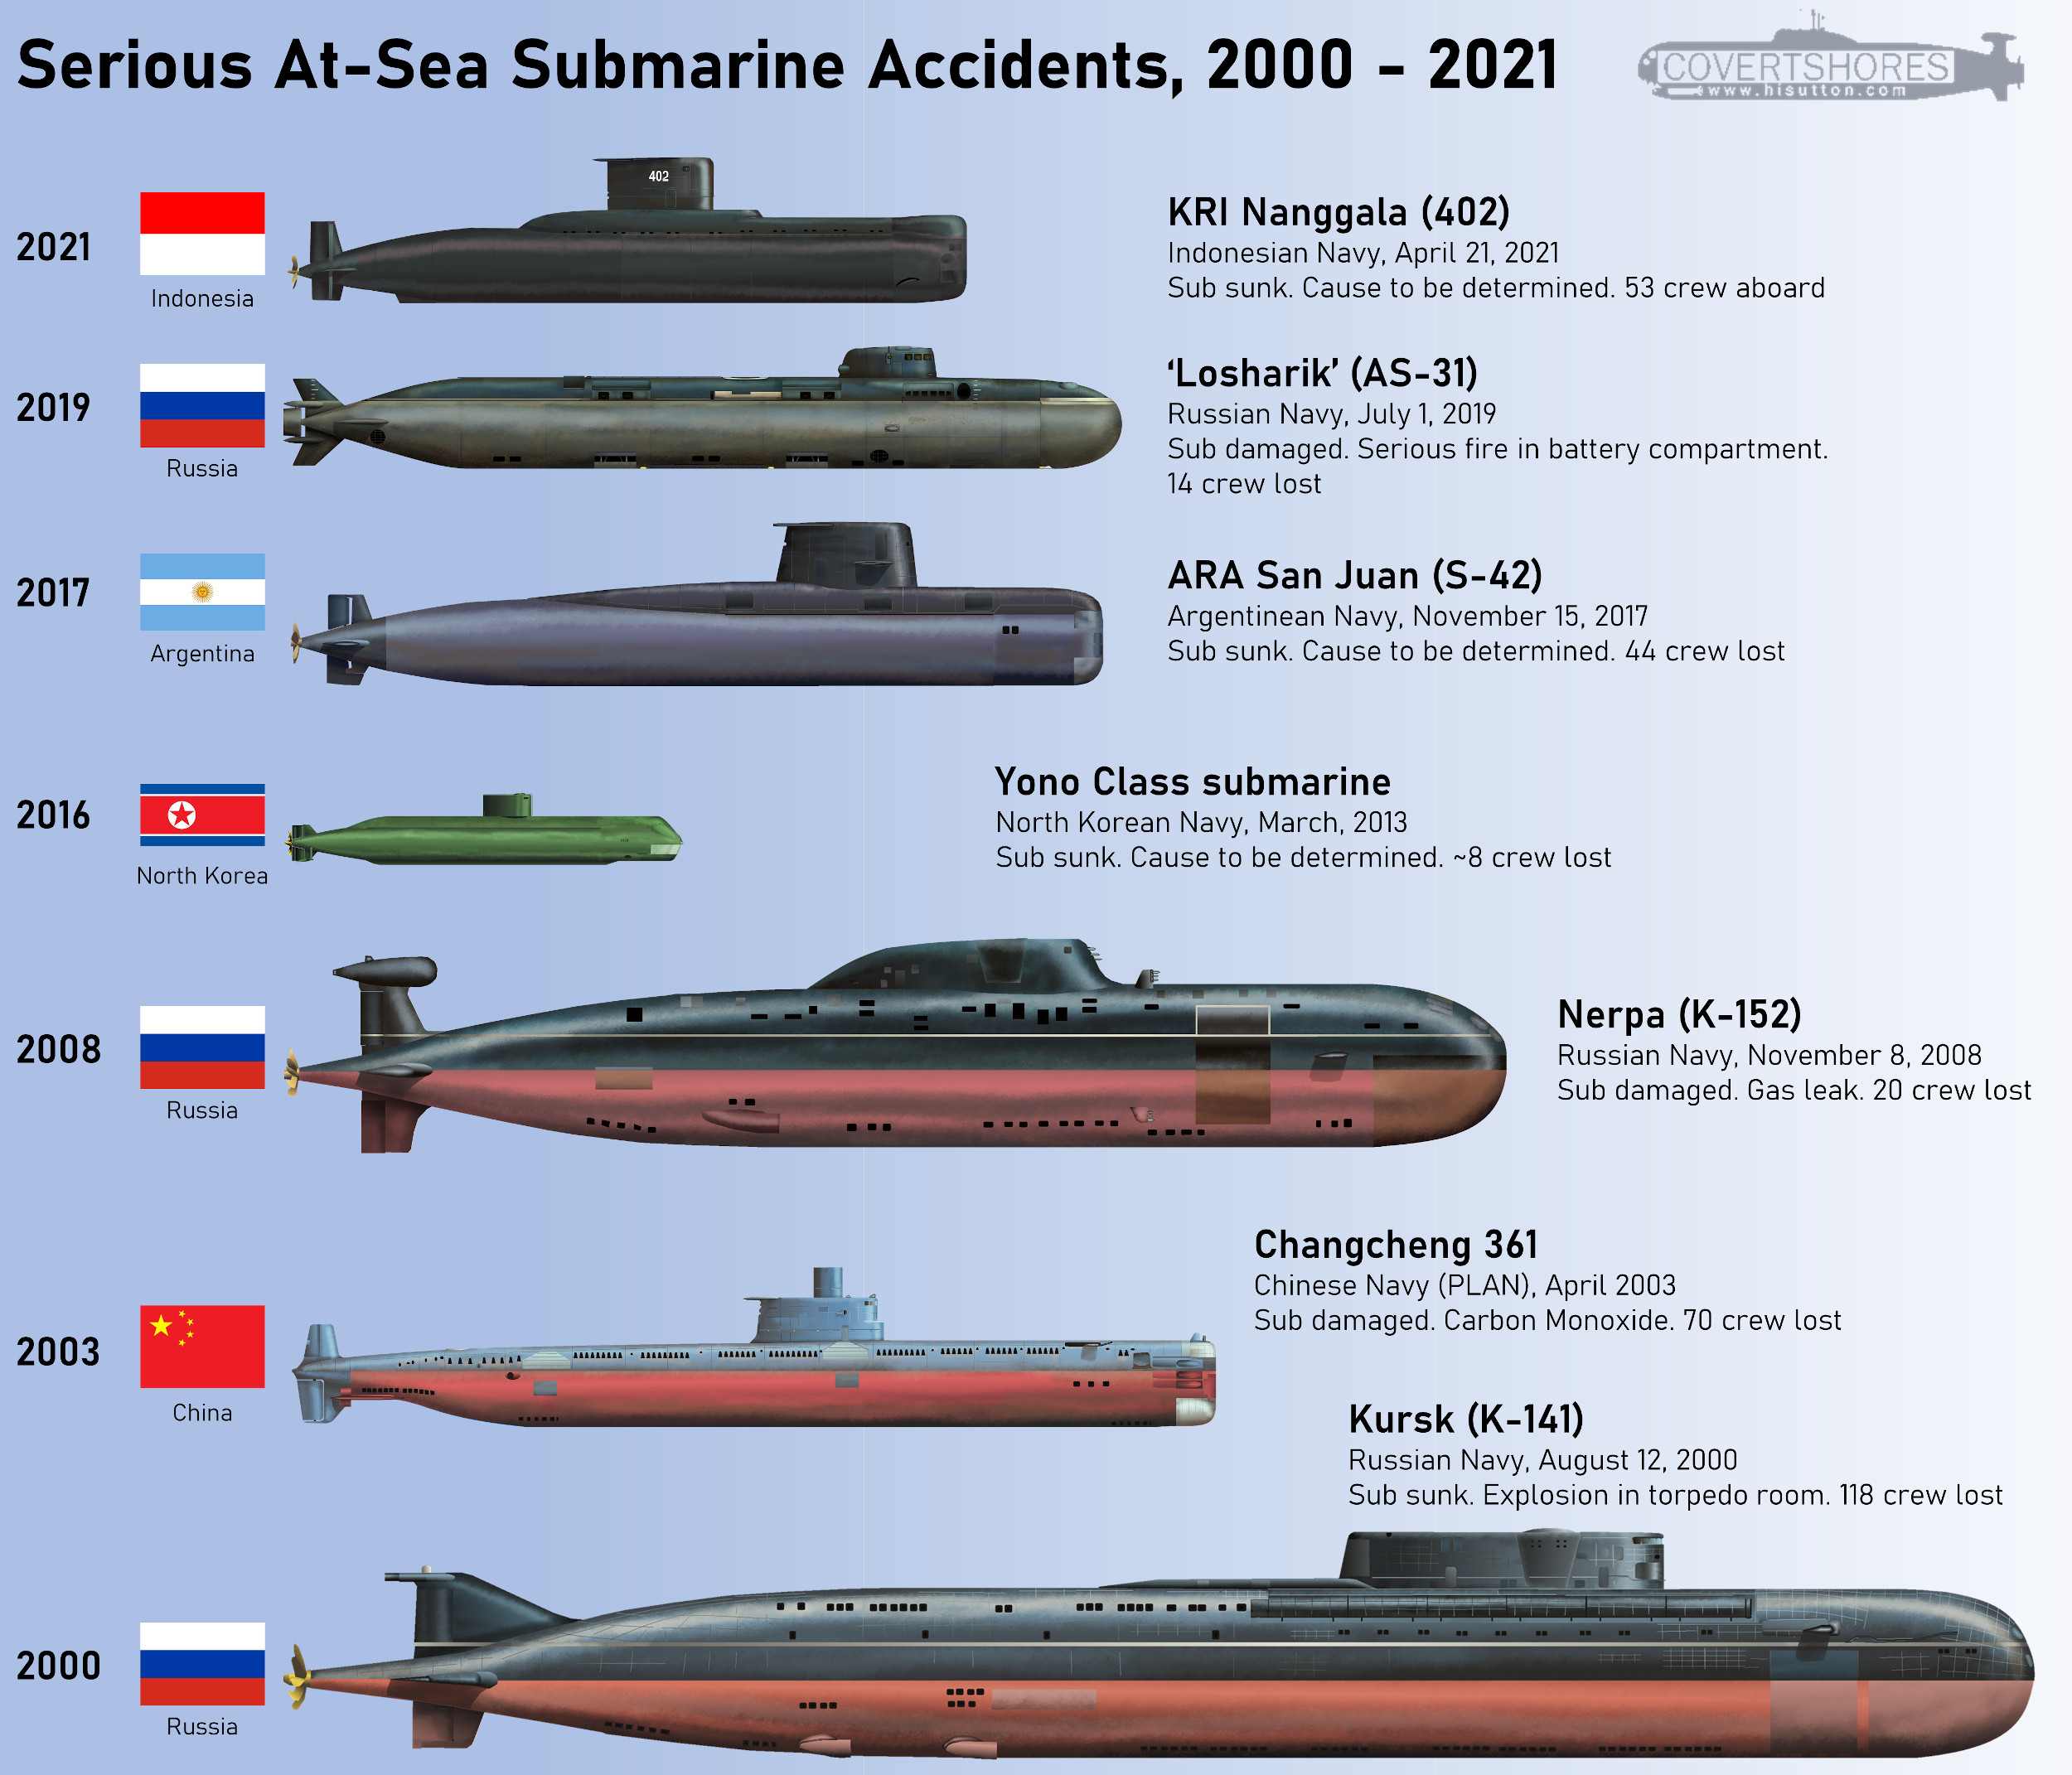 http://www.hisutton.com/images/Submarine-Disasters-2000-2021.jpg